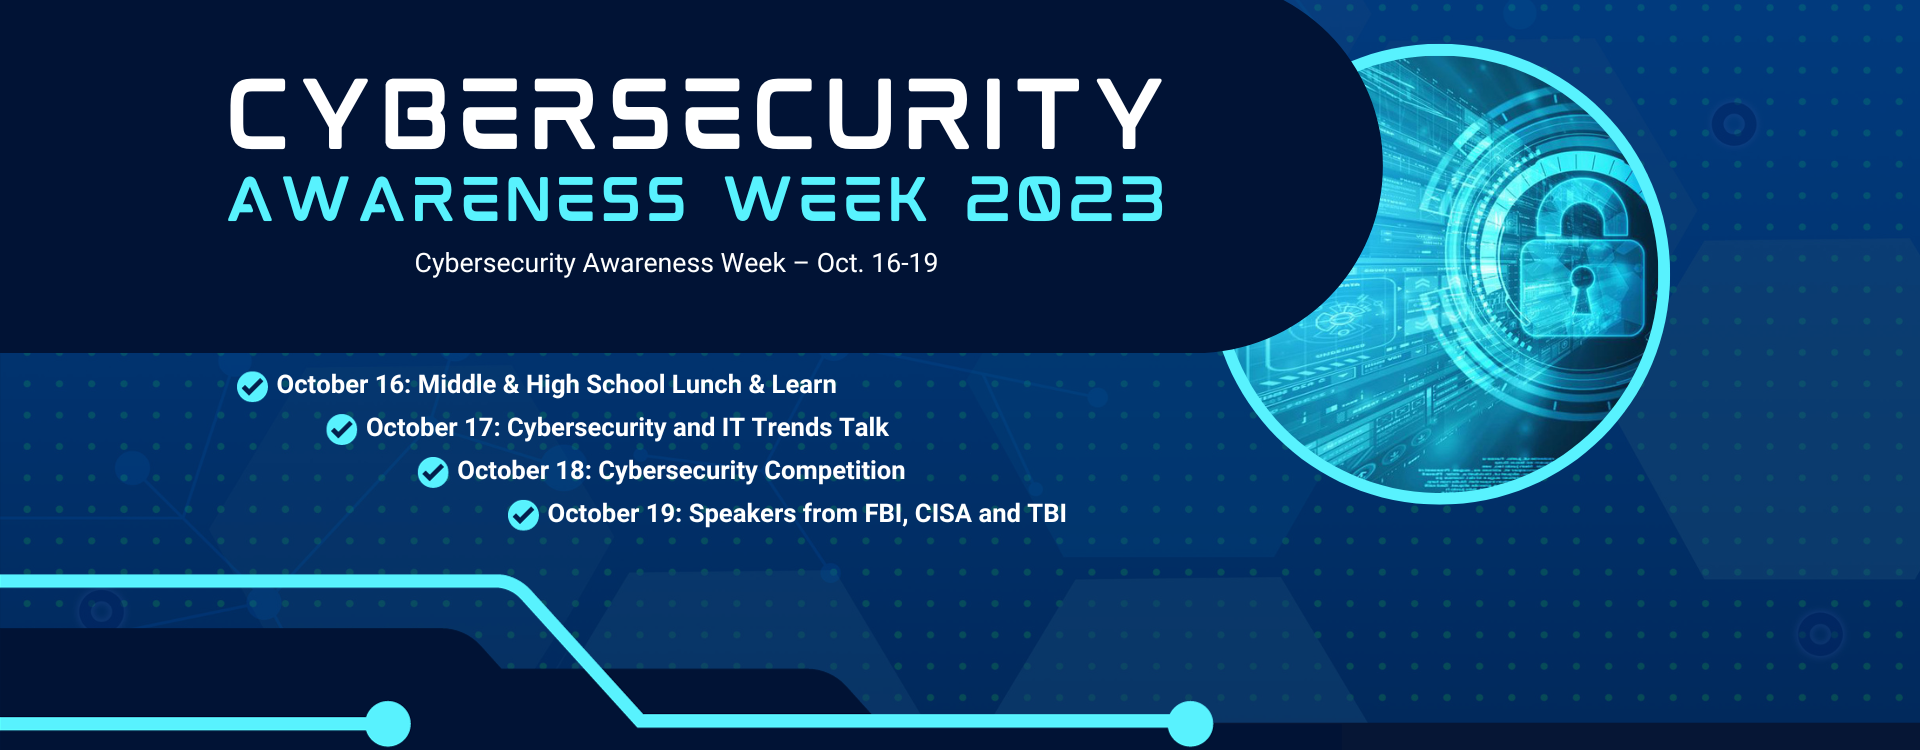 cybersecurity awareness week ad